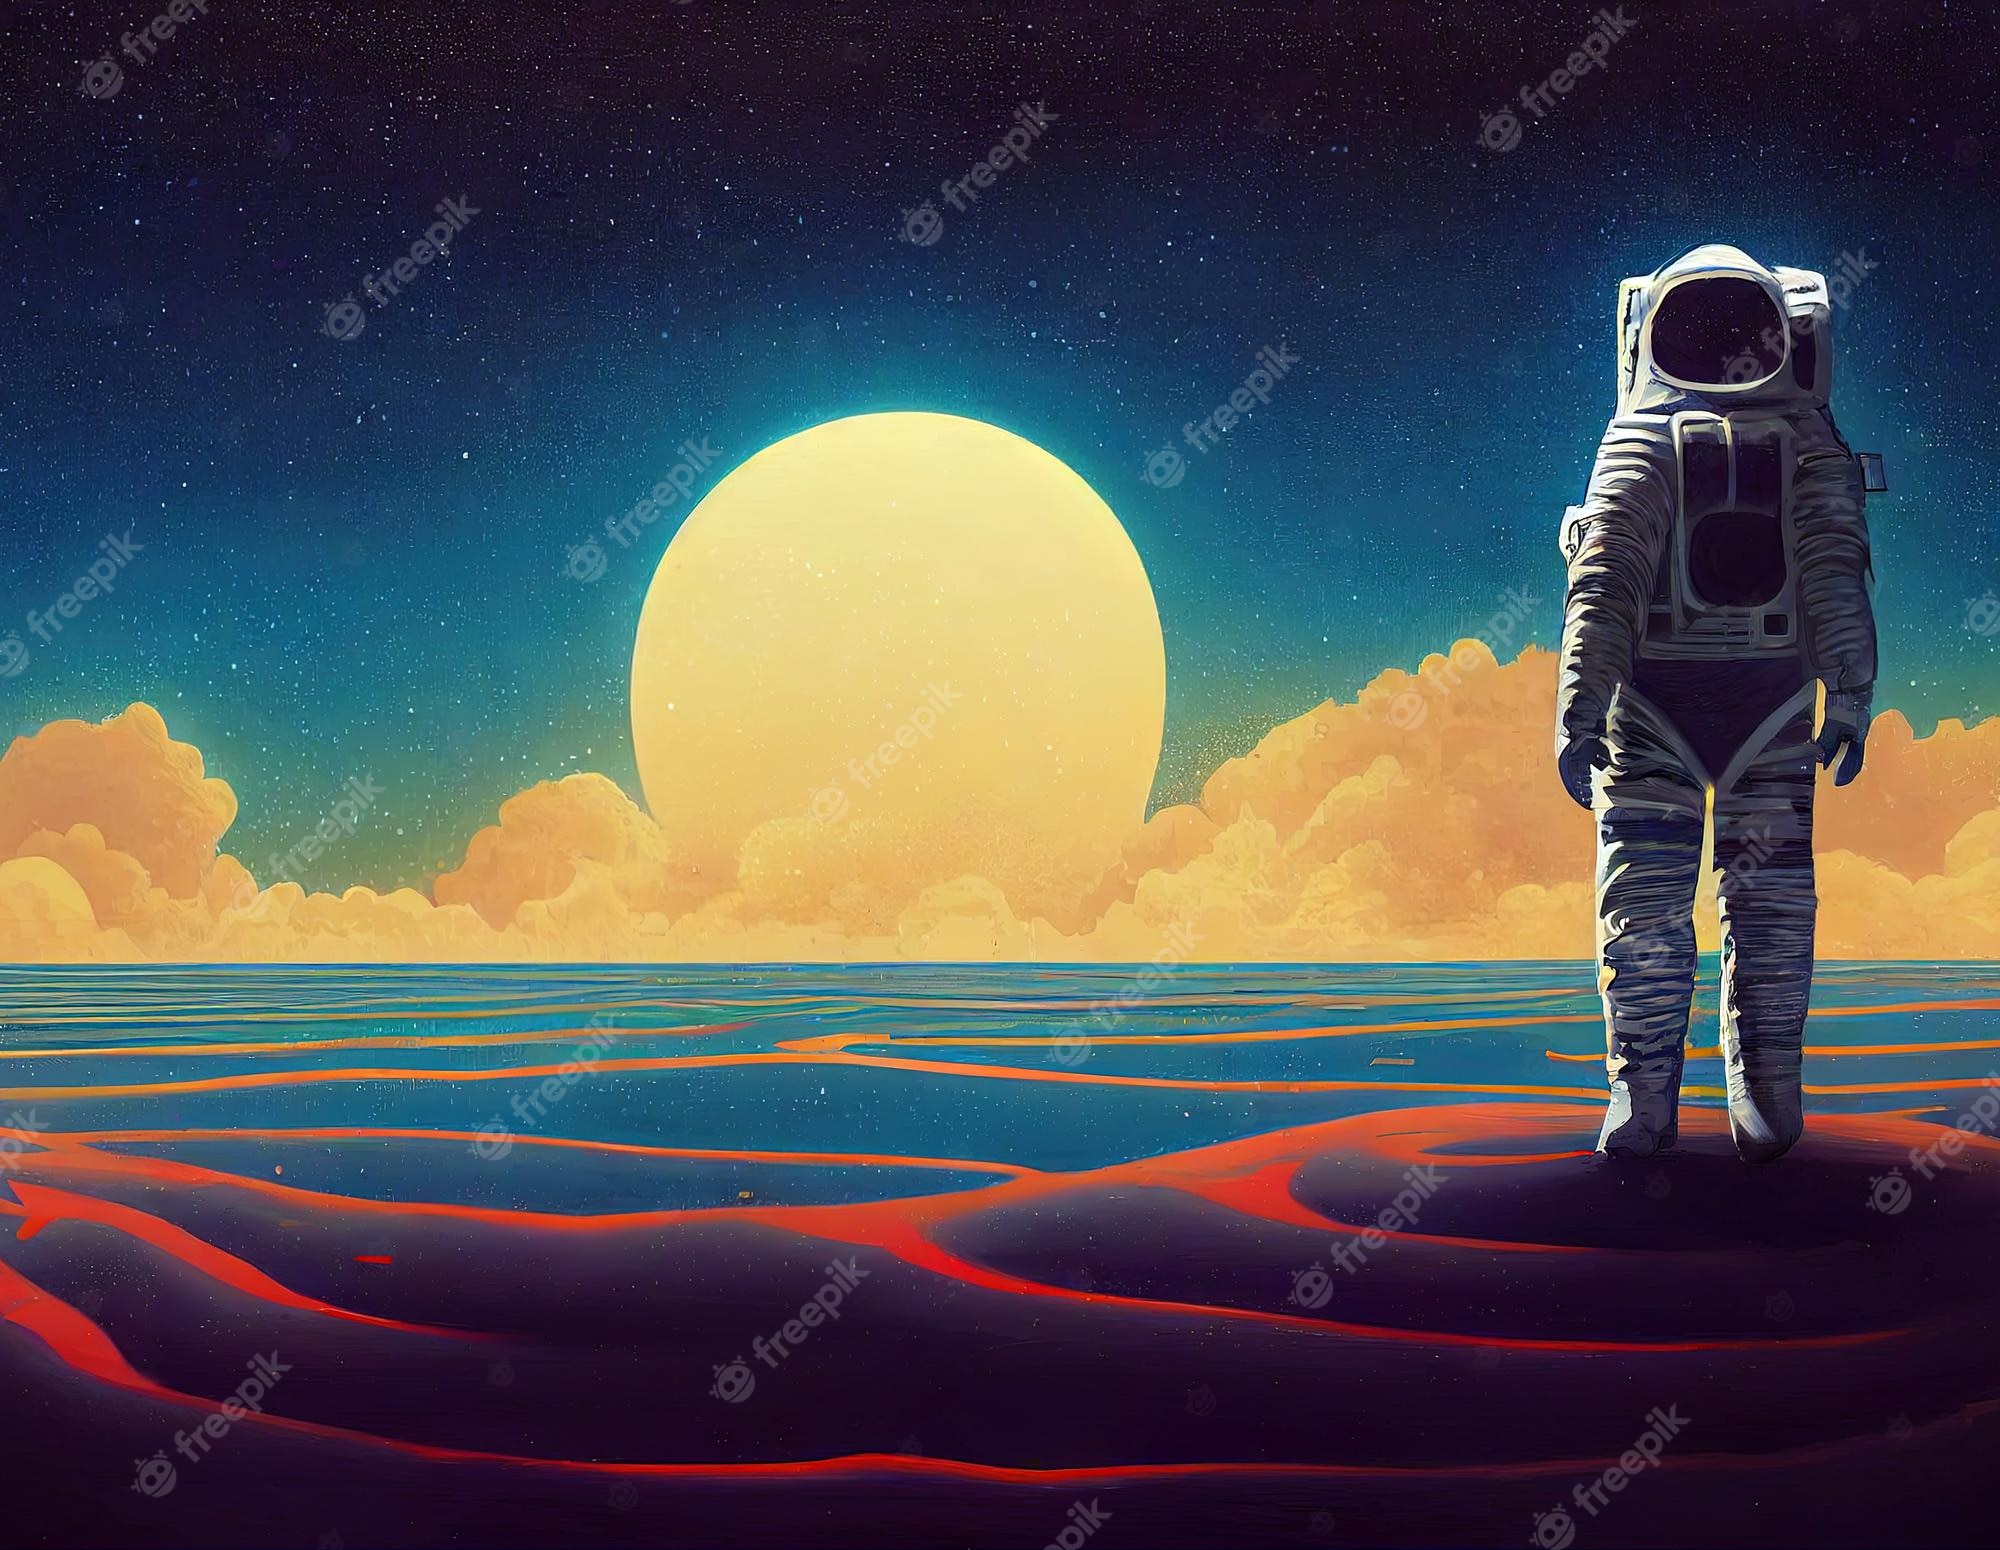 Space Art Image